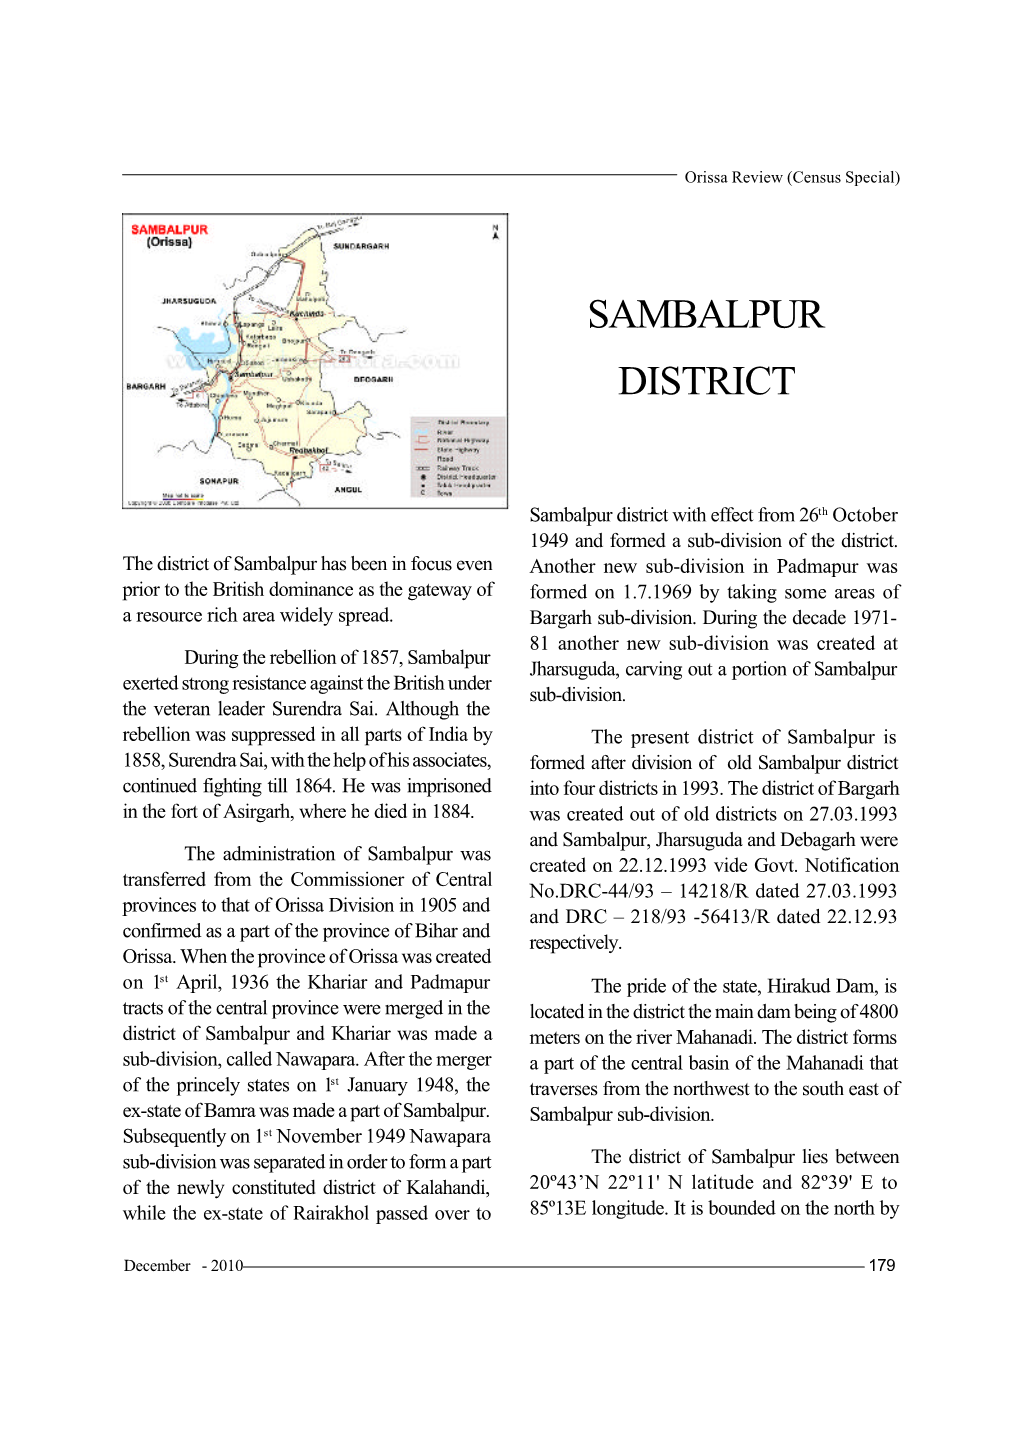 Sambalpur District